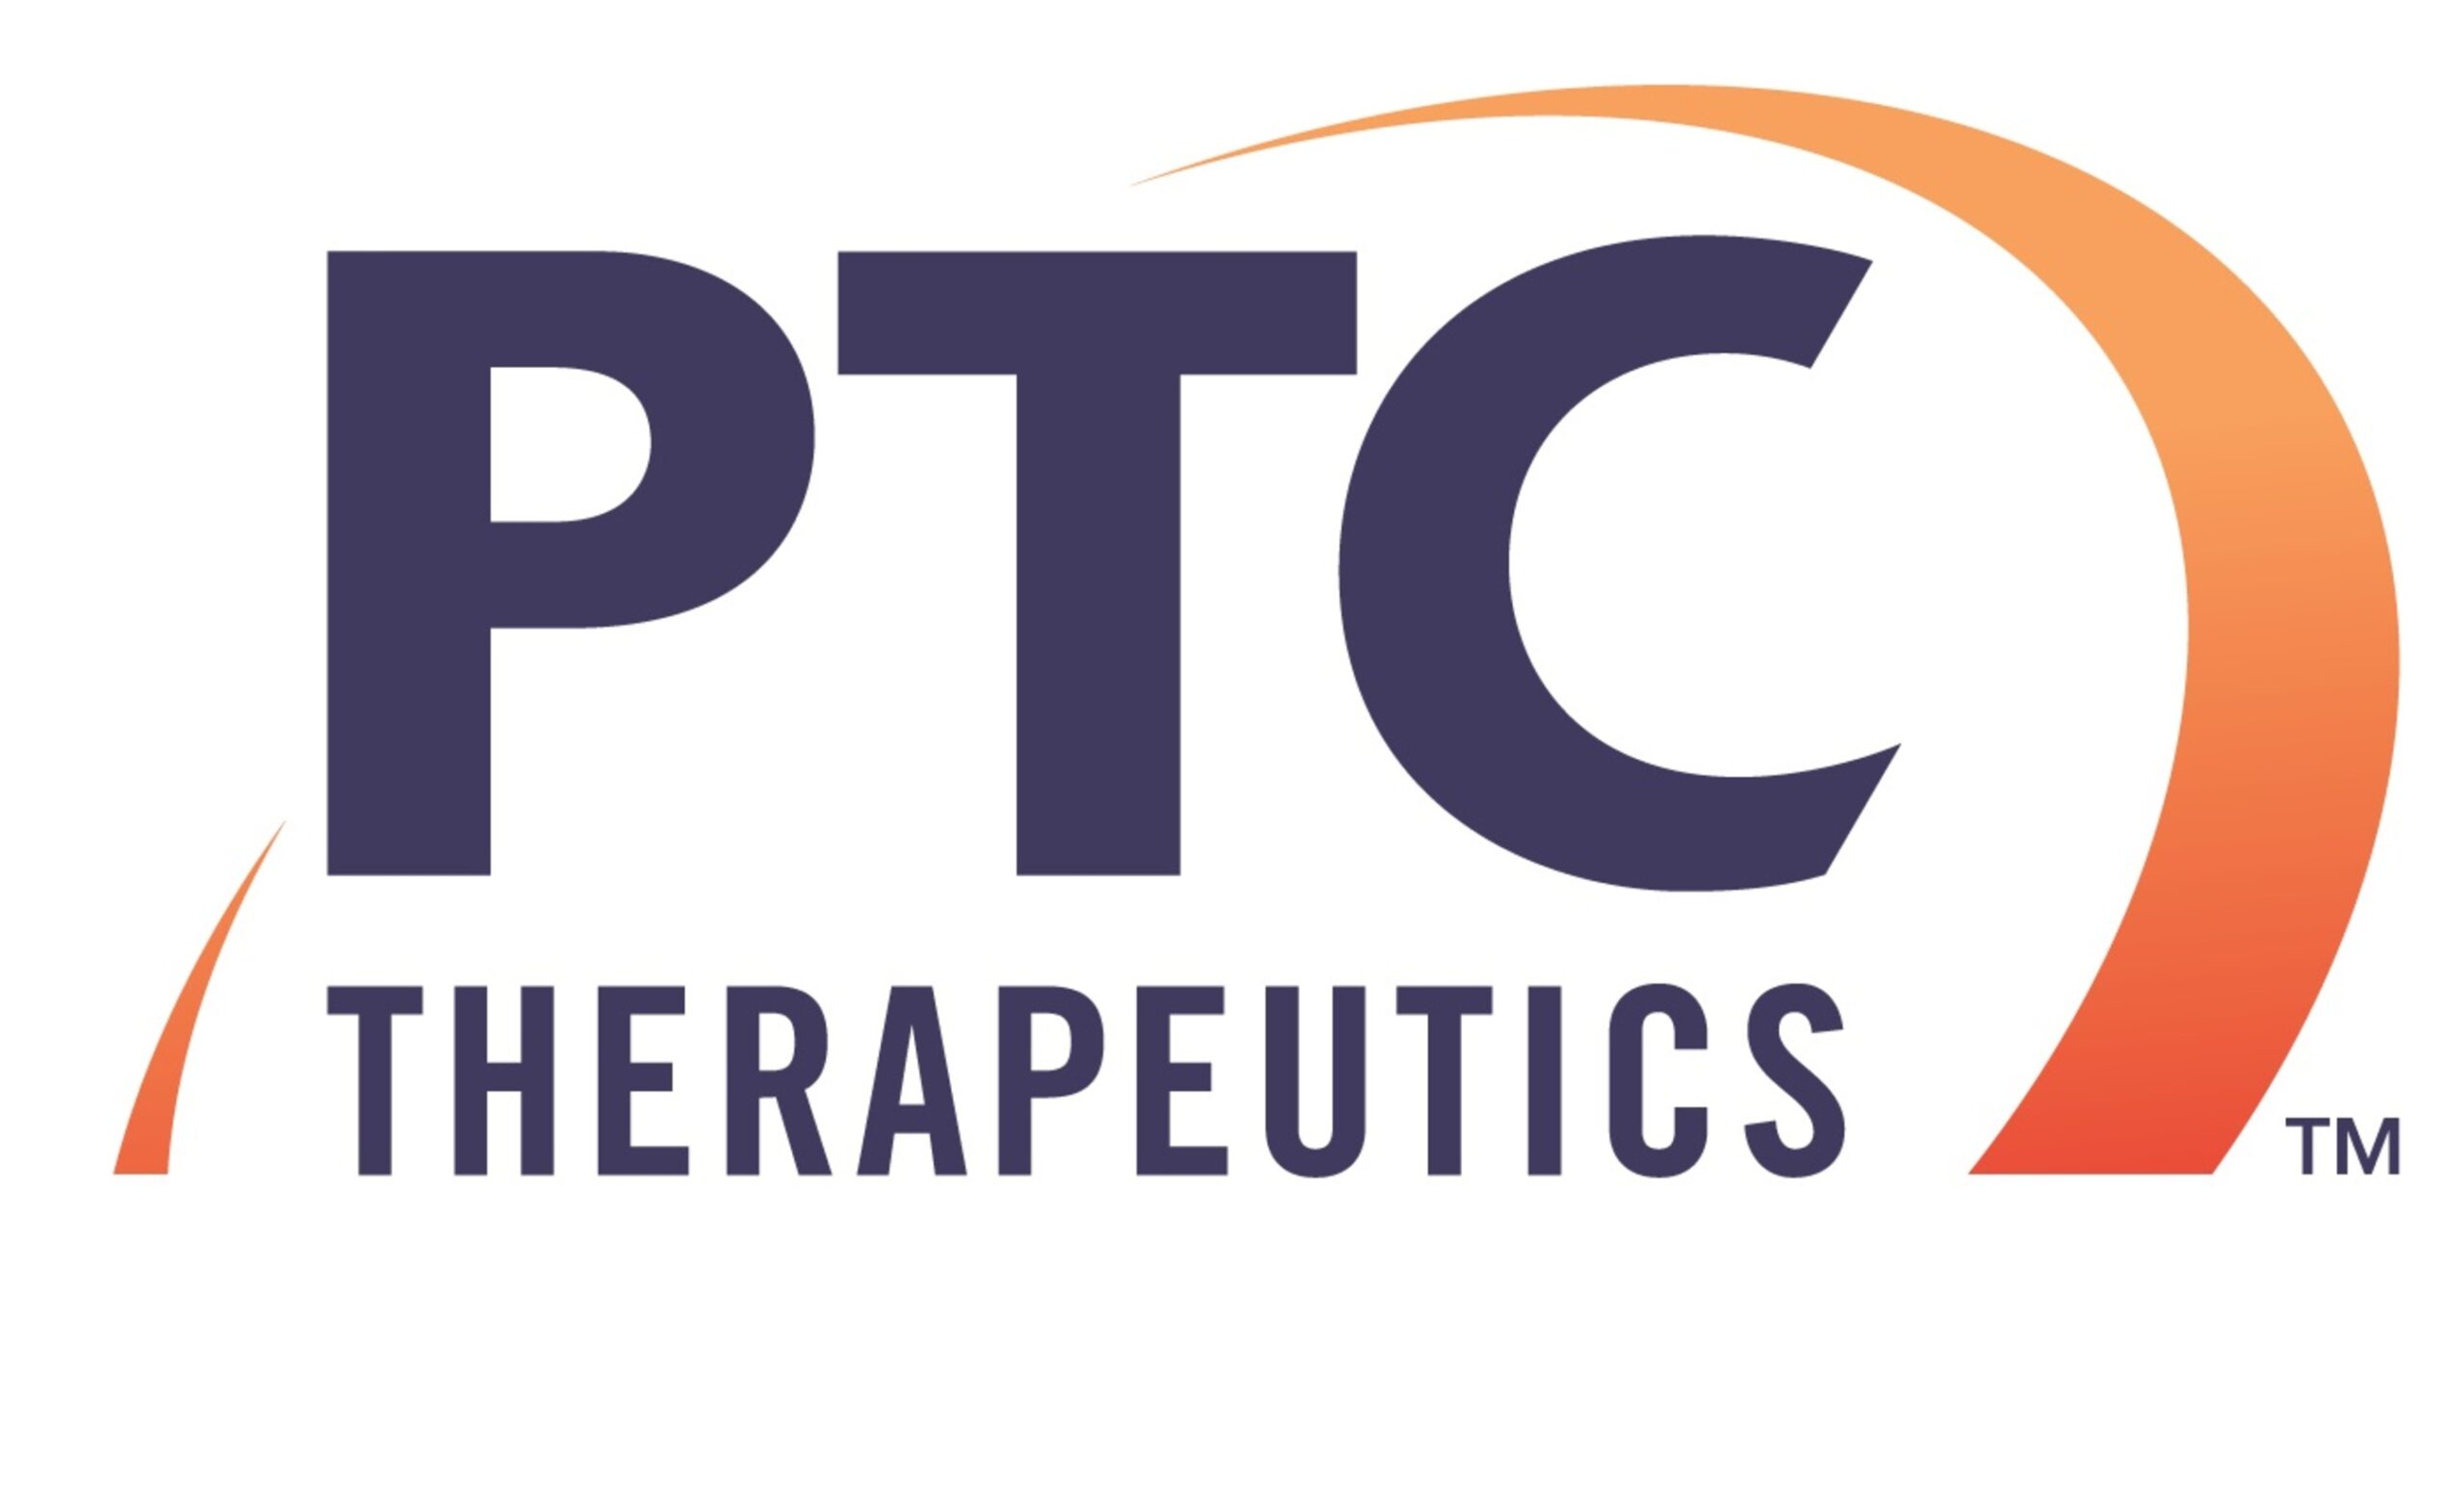 PTC Therapeutics logo. (PRNewsFoto/PTC Therapeutics, Inc.)